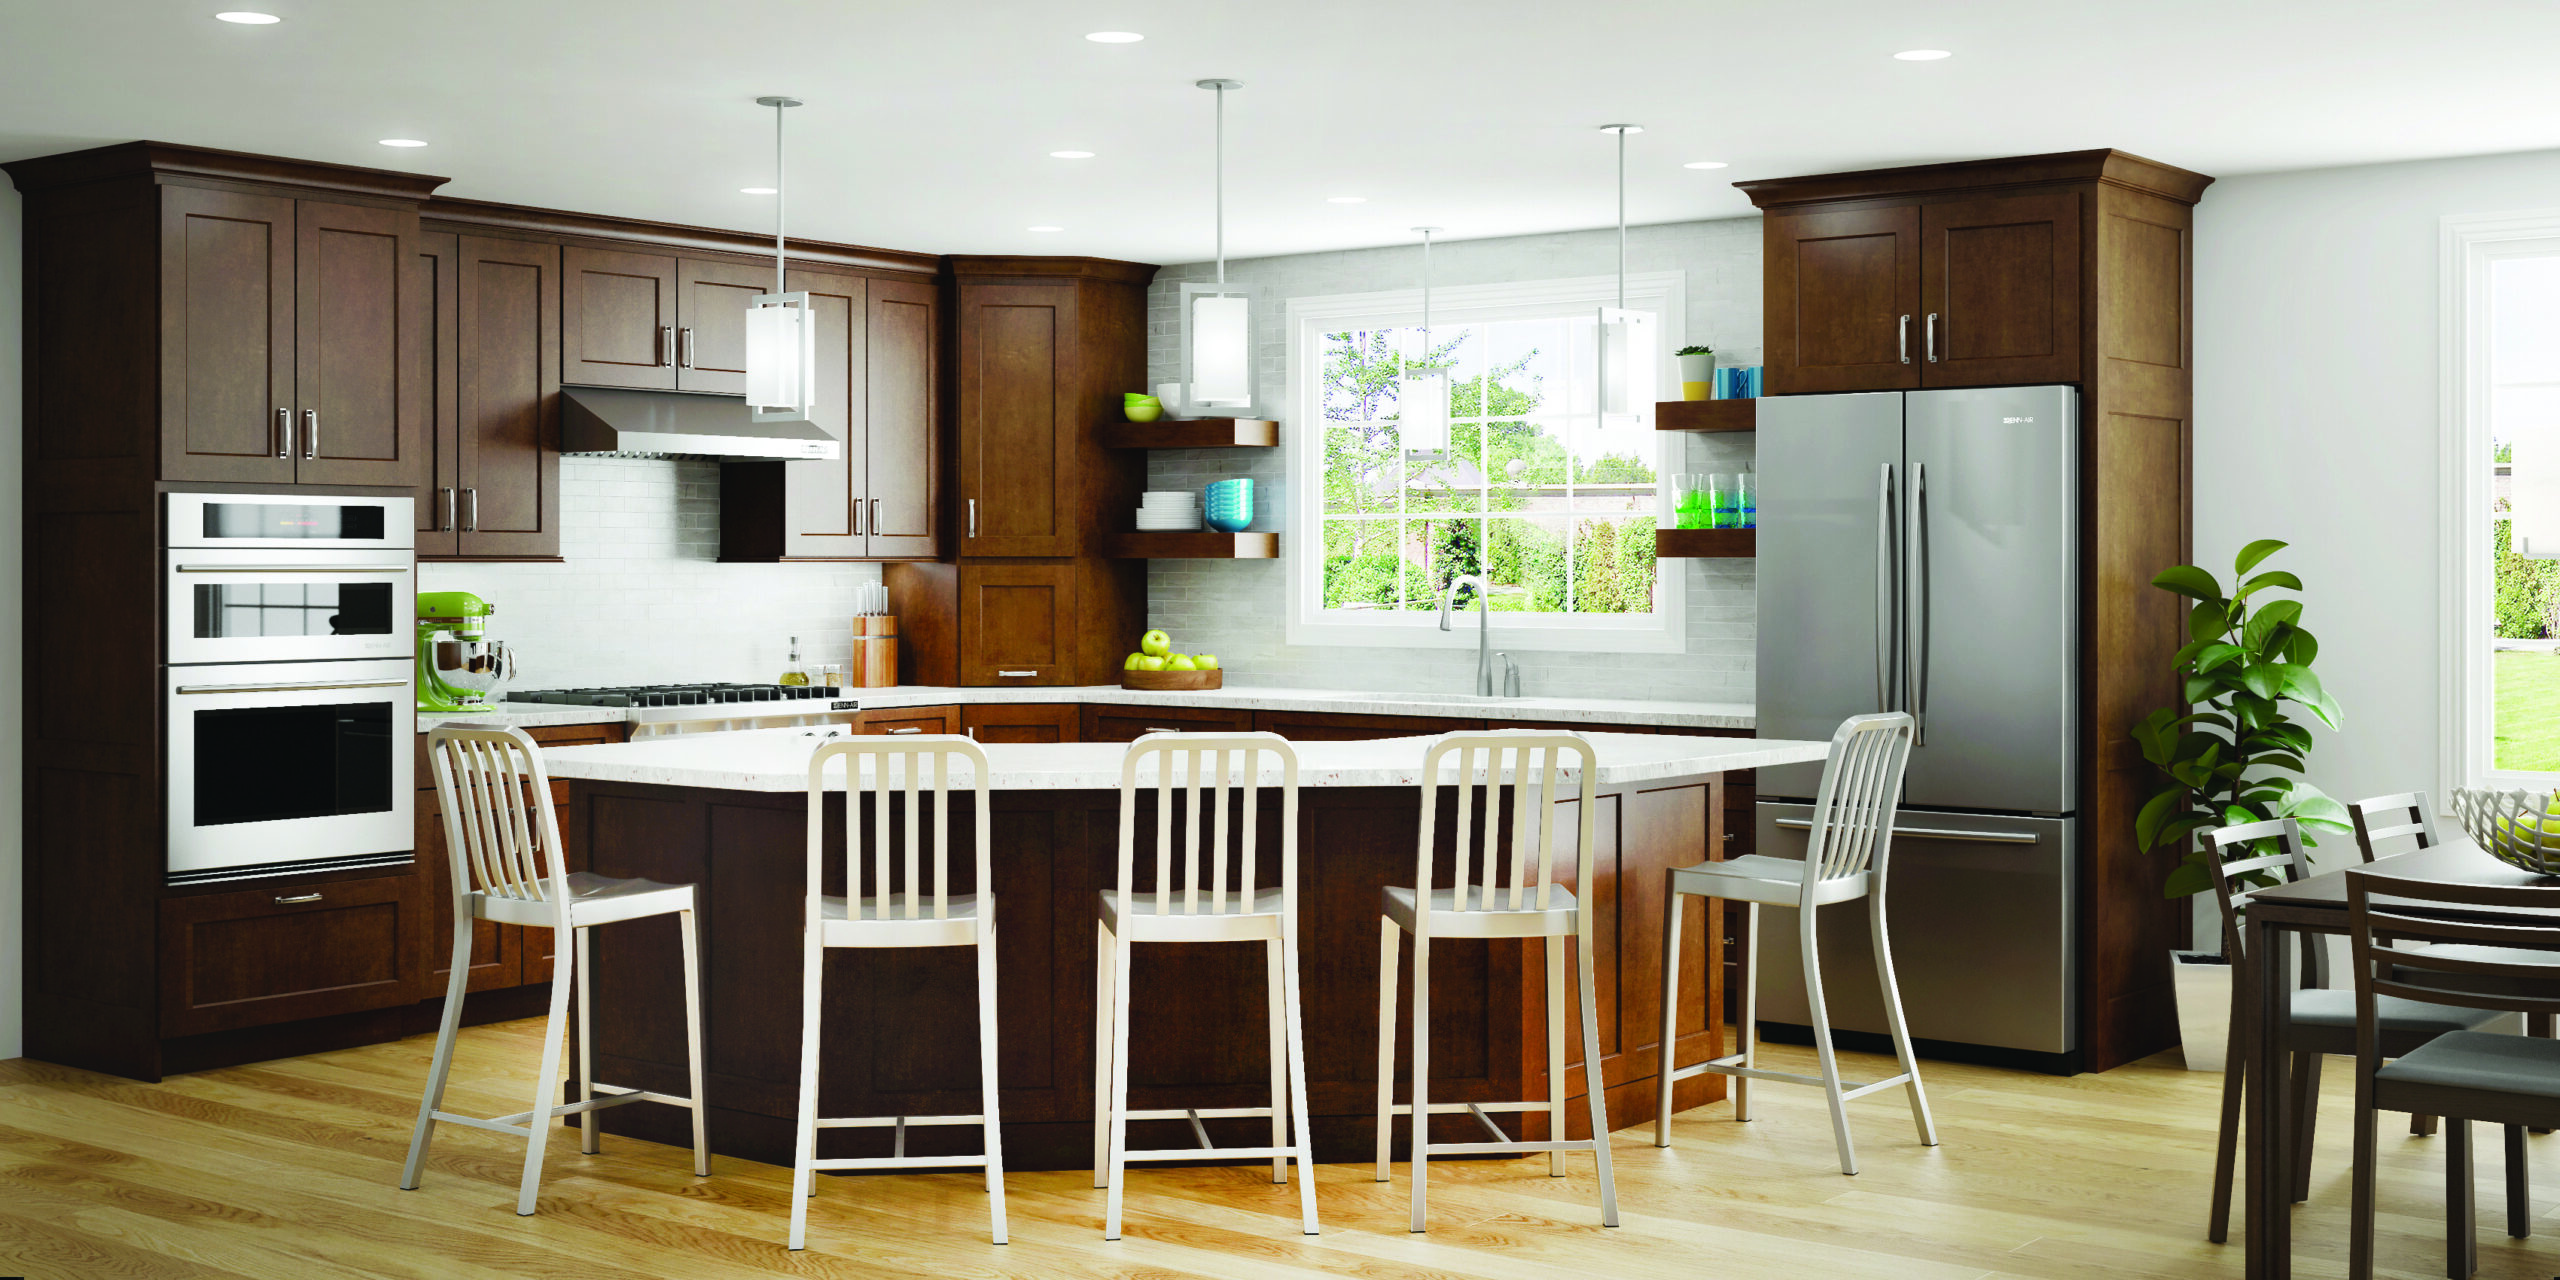 Kitchen Cabinet Designs: Free Services at French Creek Design - Casper ...